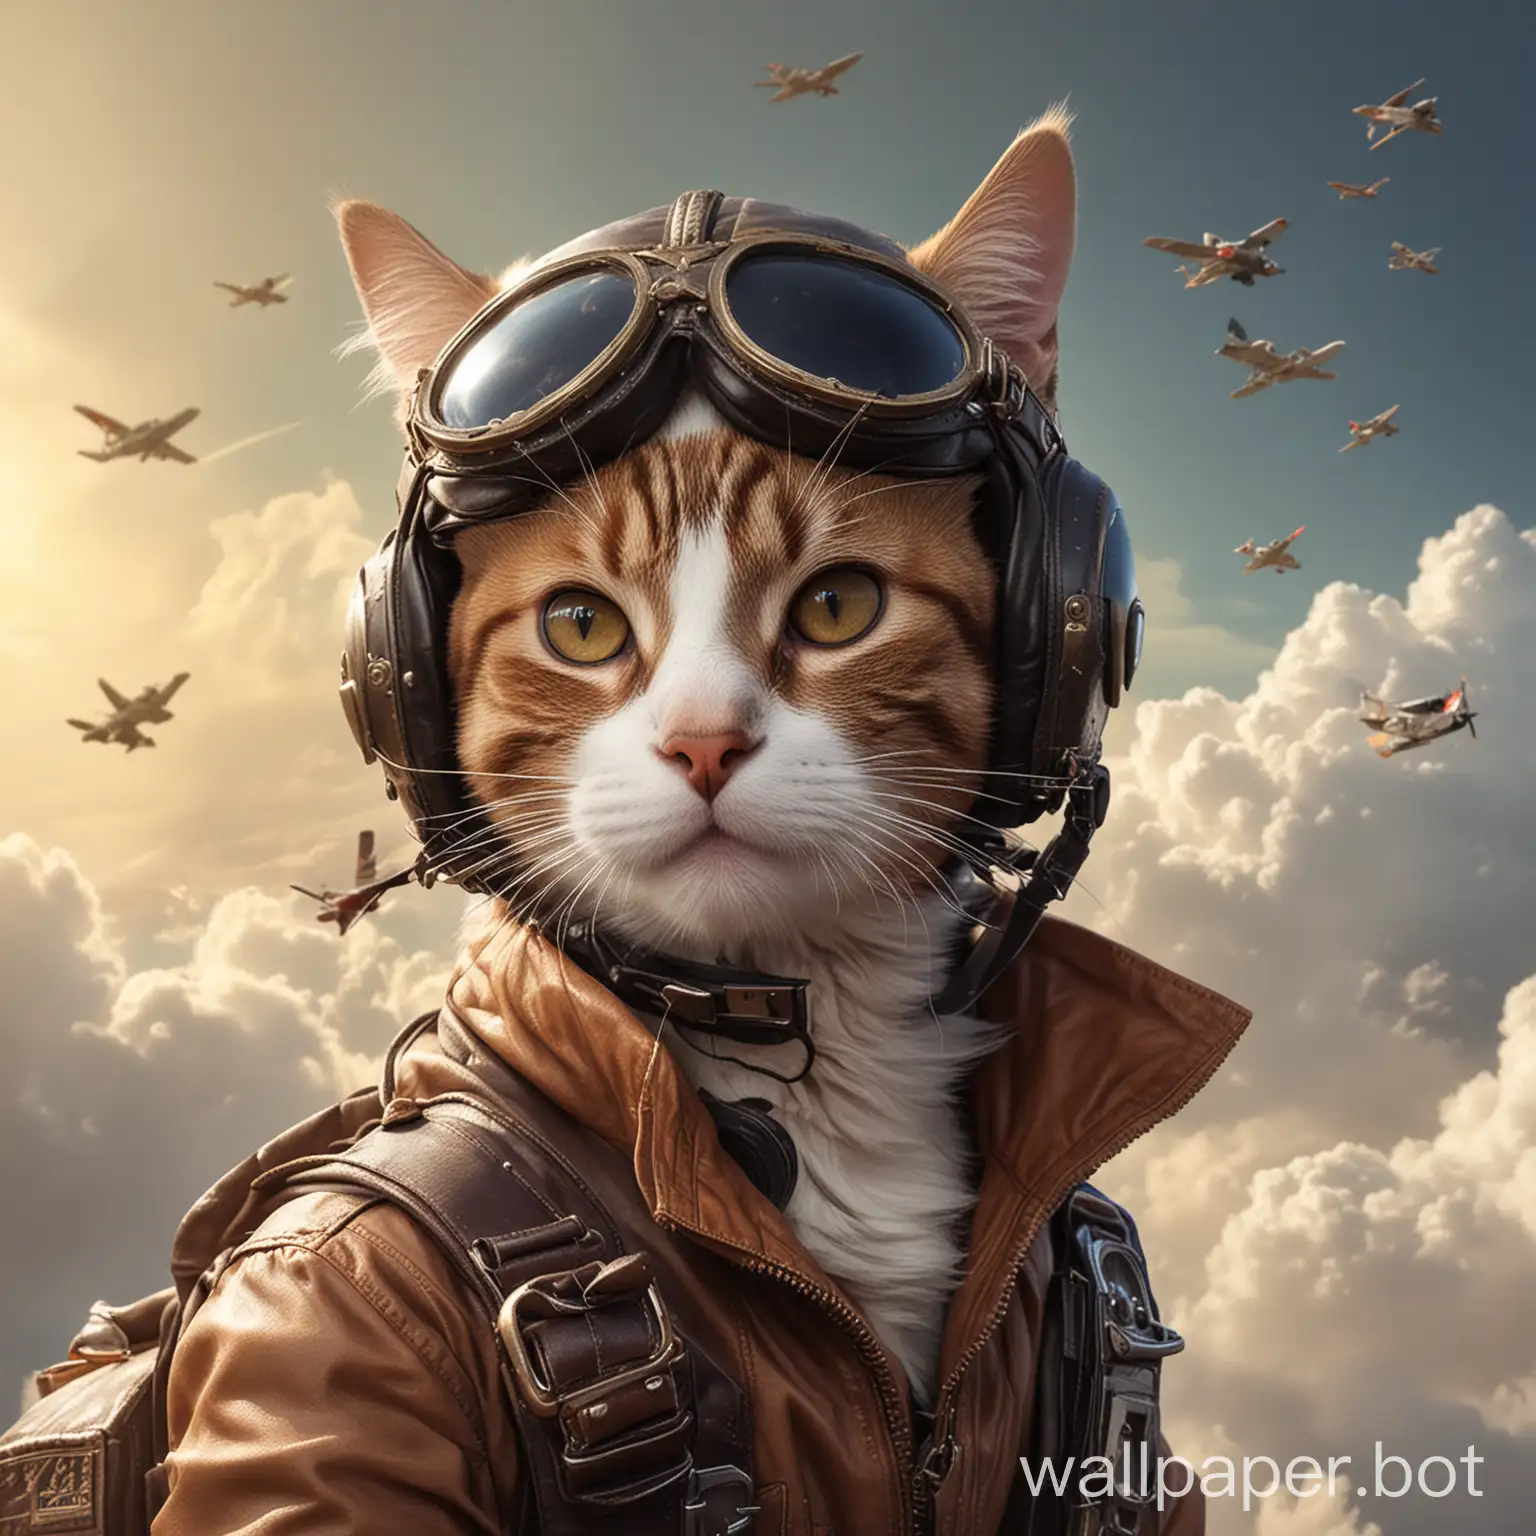 a cat pilot